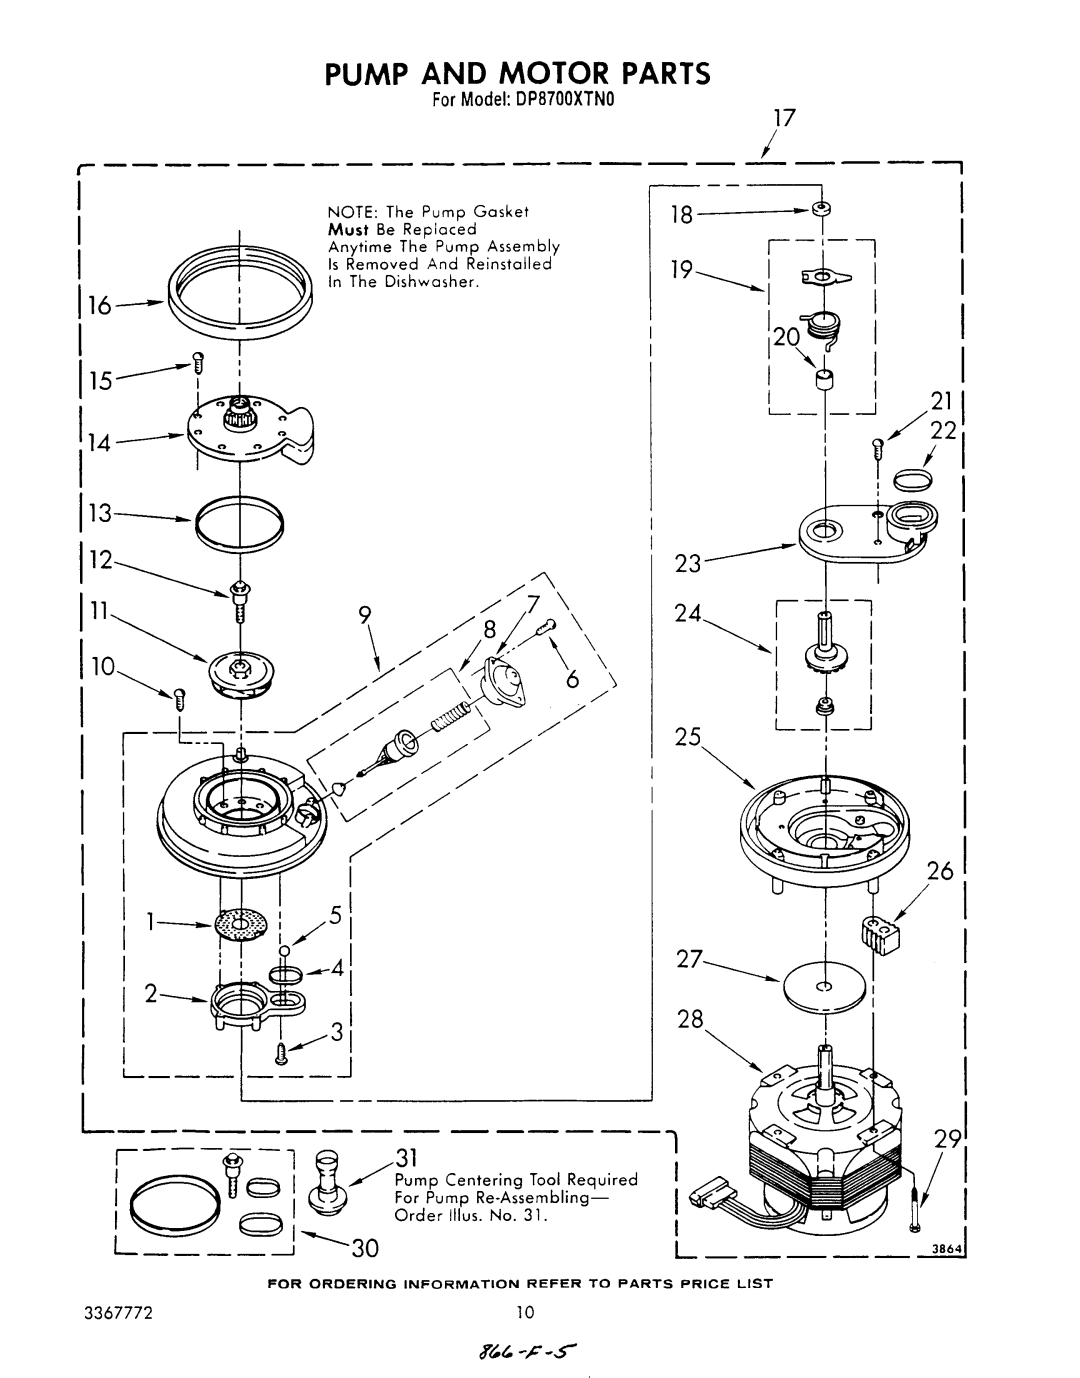 Whirlpool DP8700XTN0 manual 